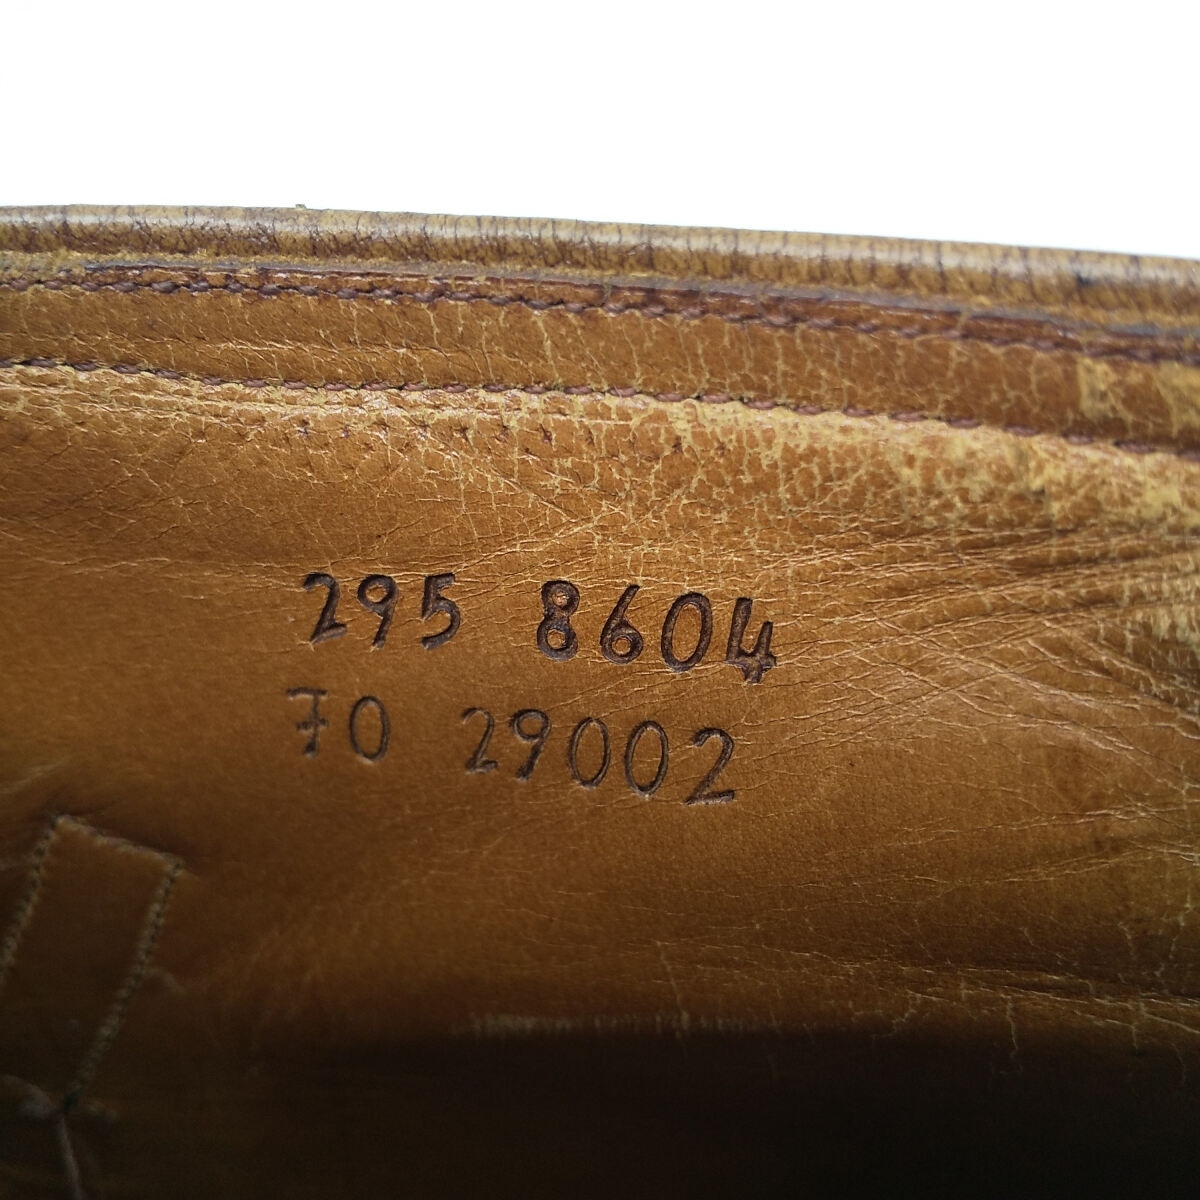  old clothes naan bush Nunn Bushmonk strap boots US10 men's 28.5cm /saa009273